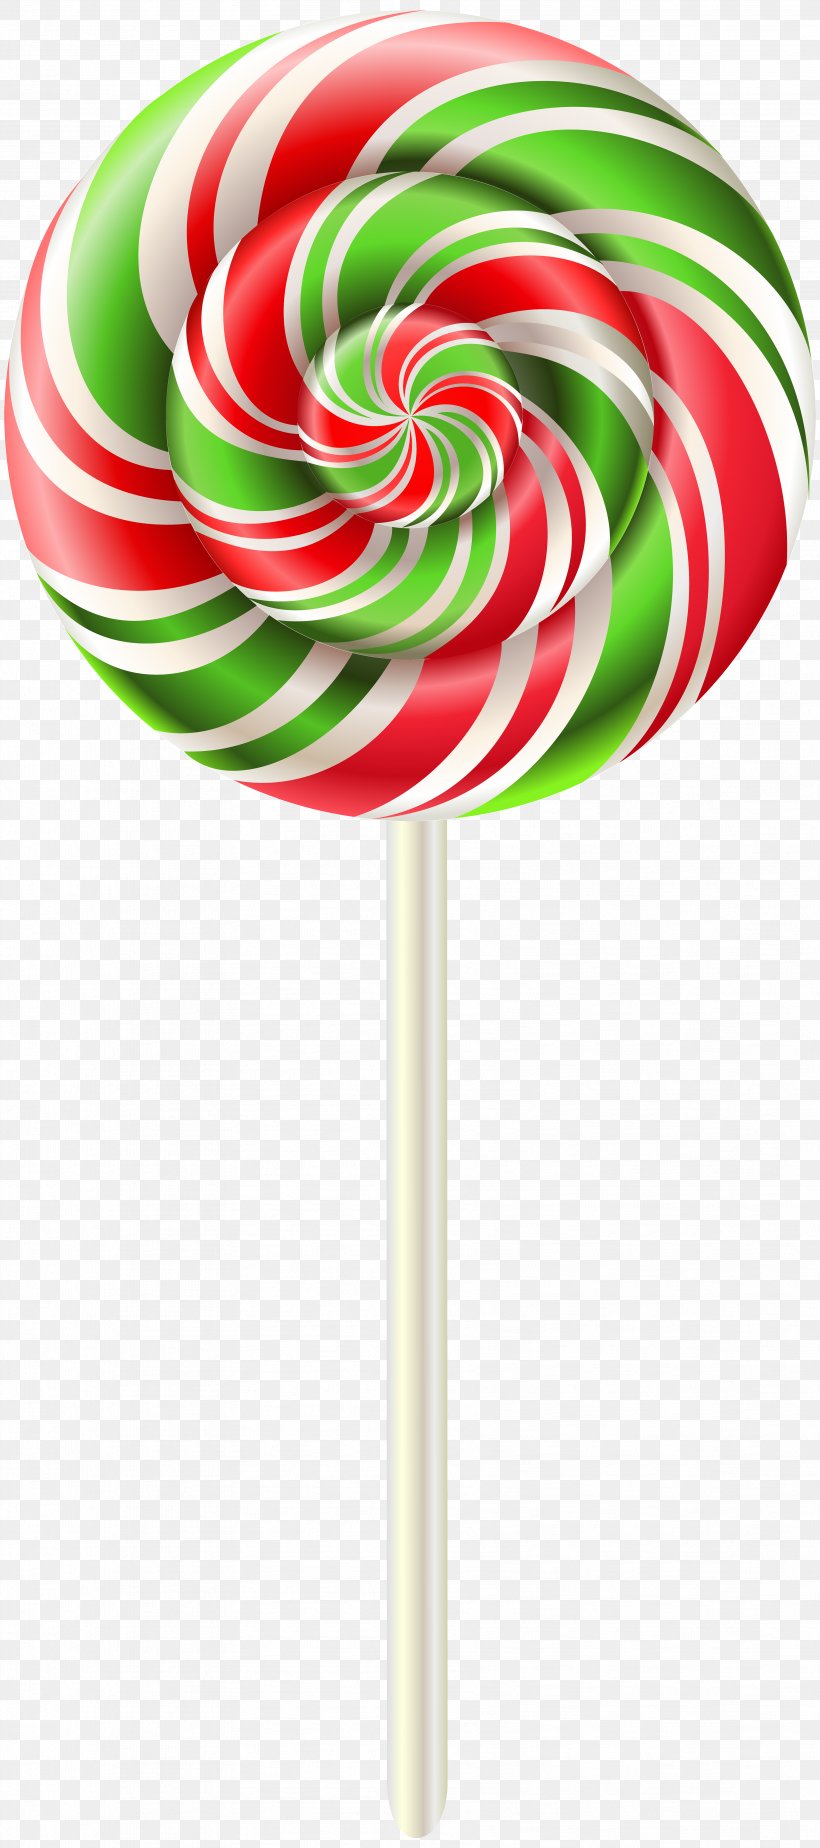 Lollipop Candy Desktop Wallpaper Clip Art, PNG, 3548x8000px, Lollipop, Android Lollipop, Candy, Caramel, Confectionery Download Free